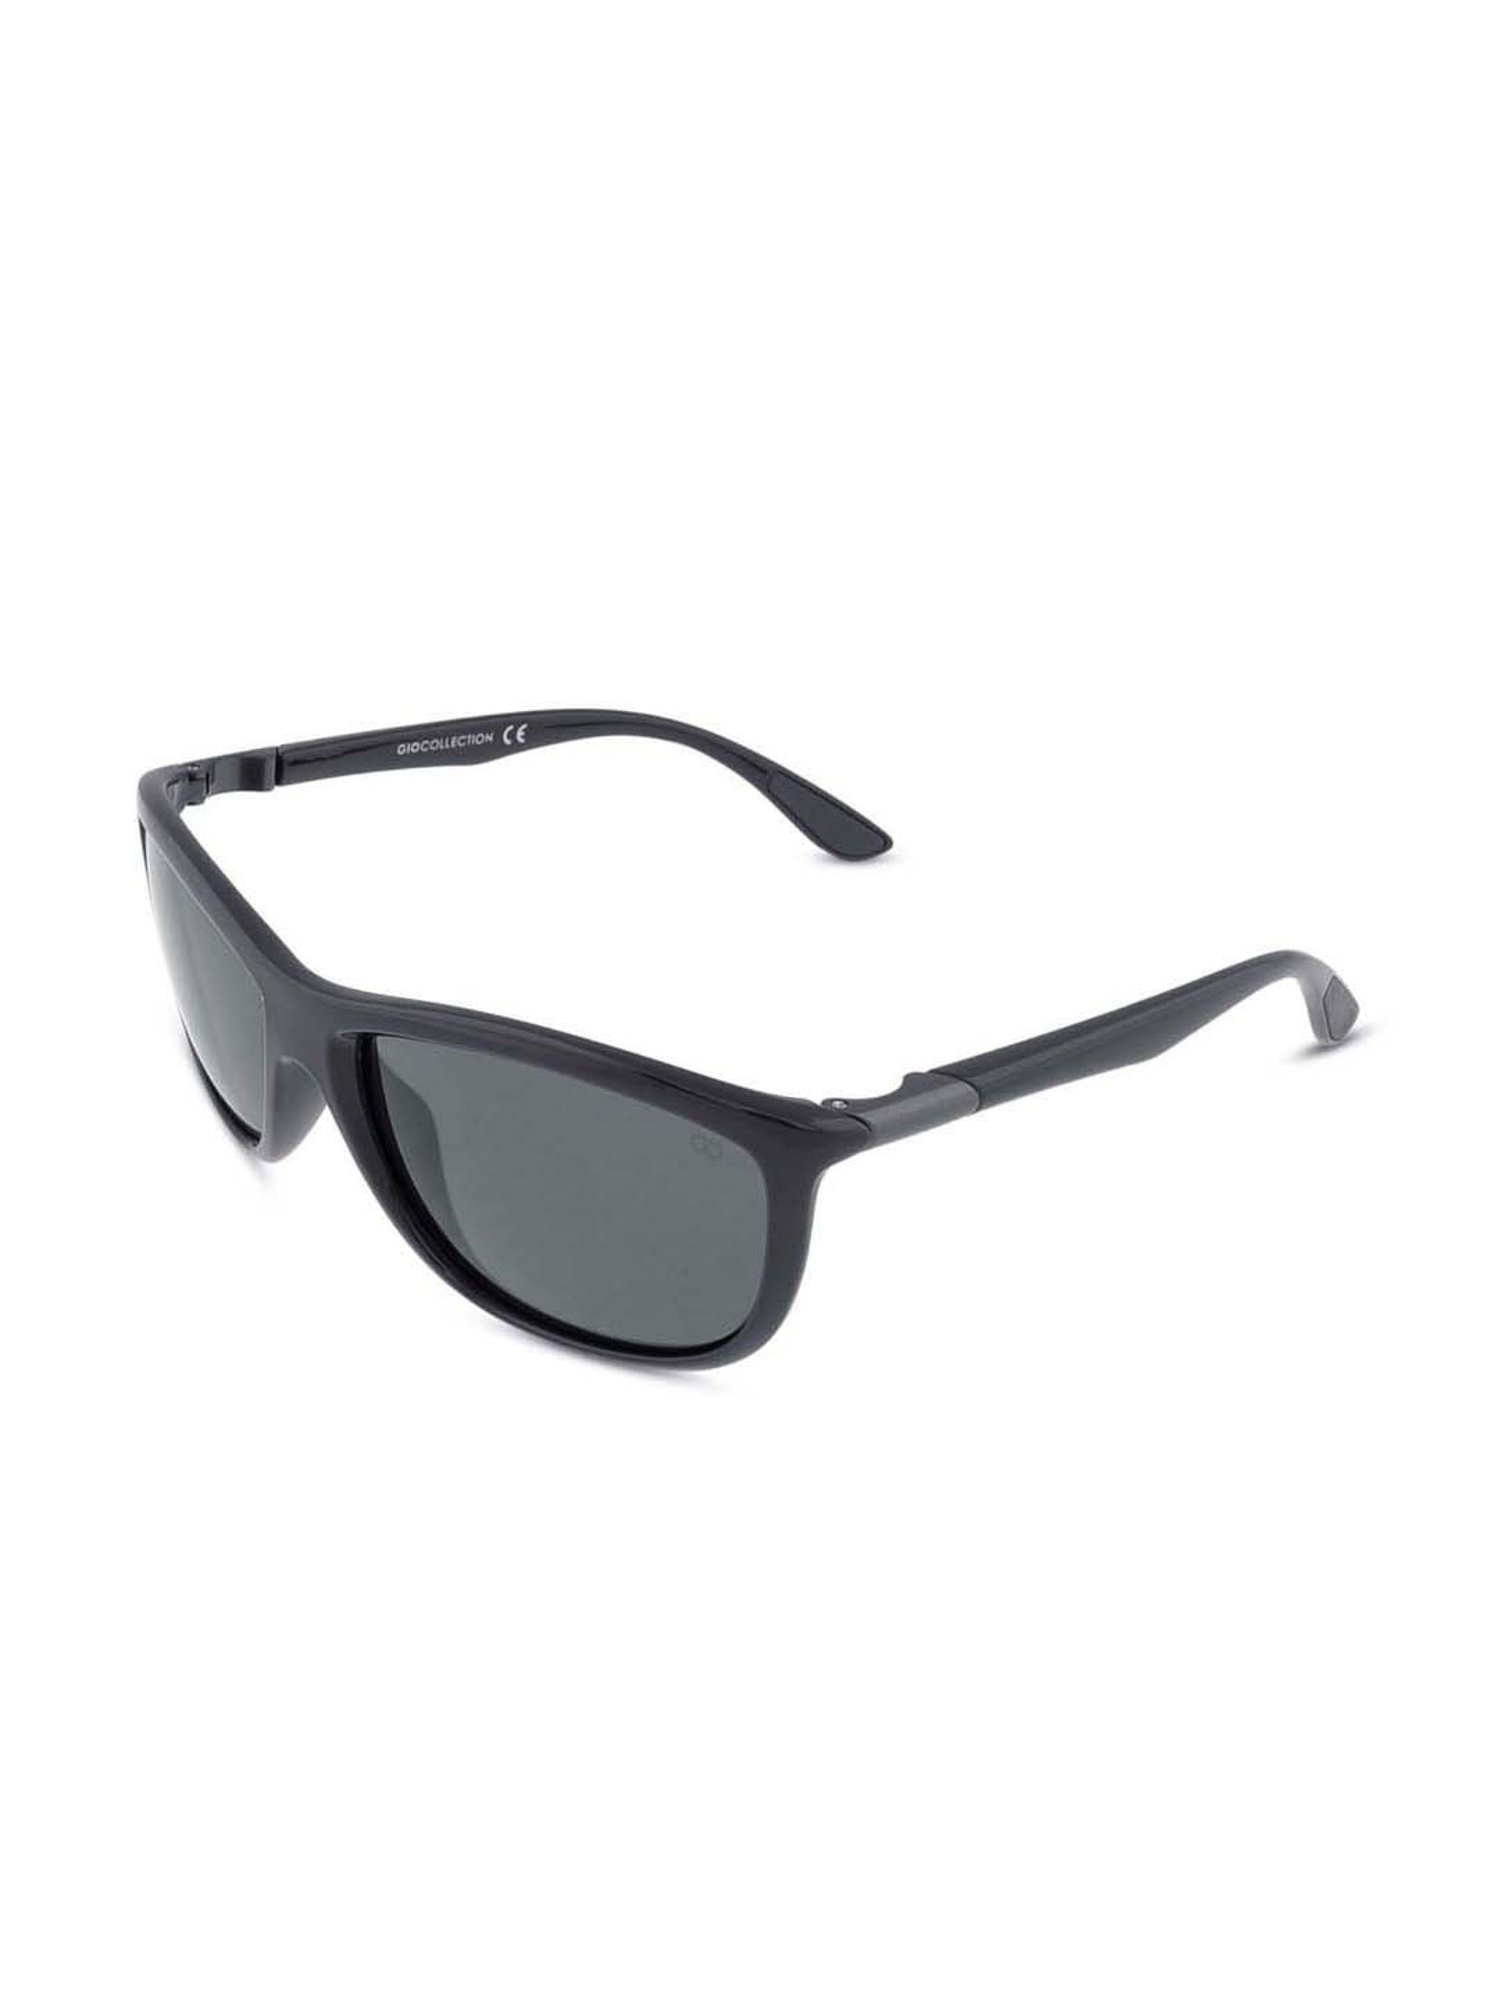 Torii grey marble sunglasses, Designer Collection, Coveti